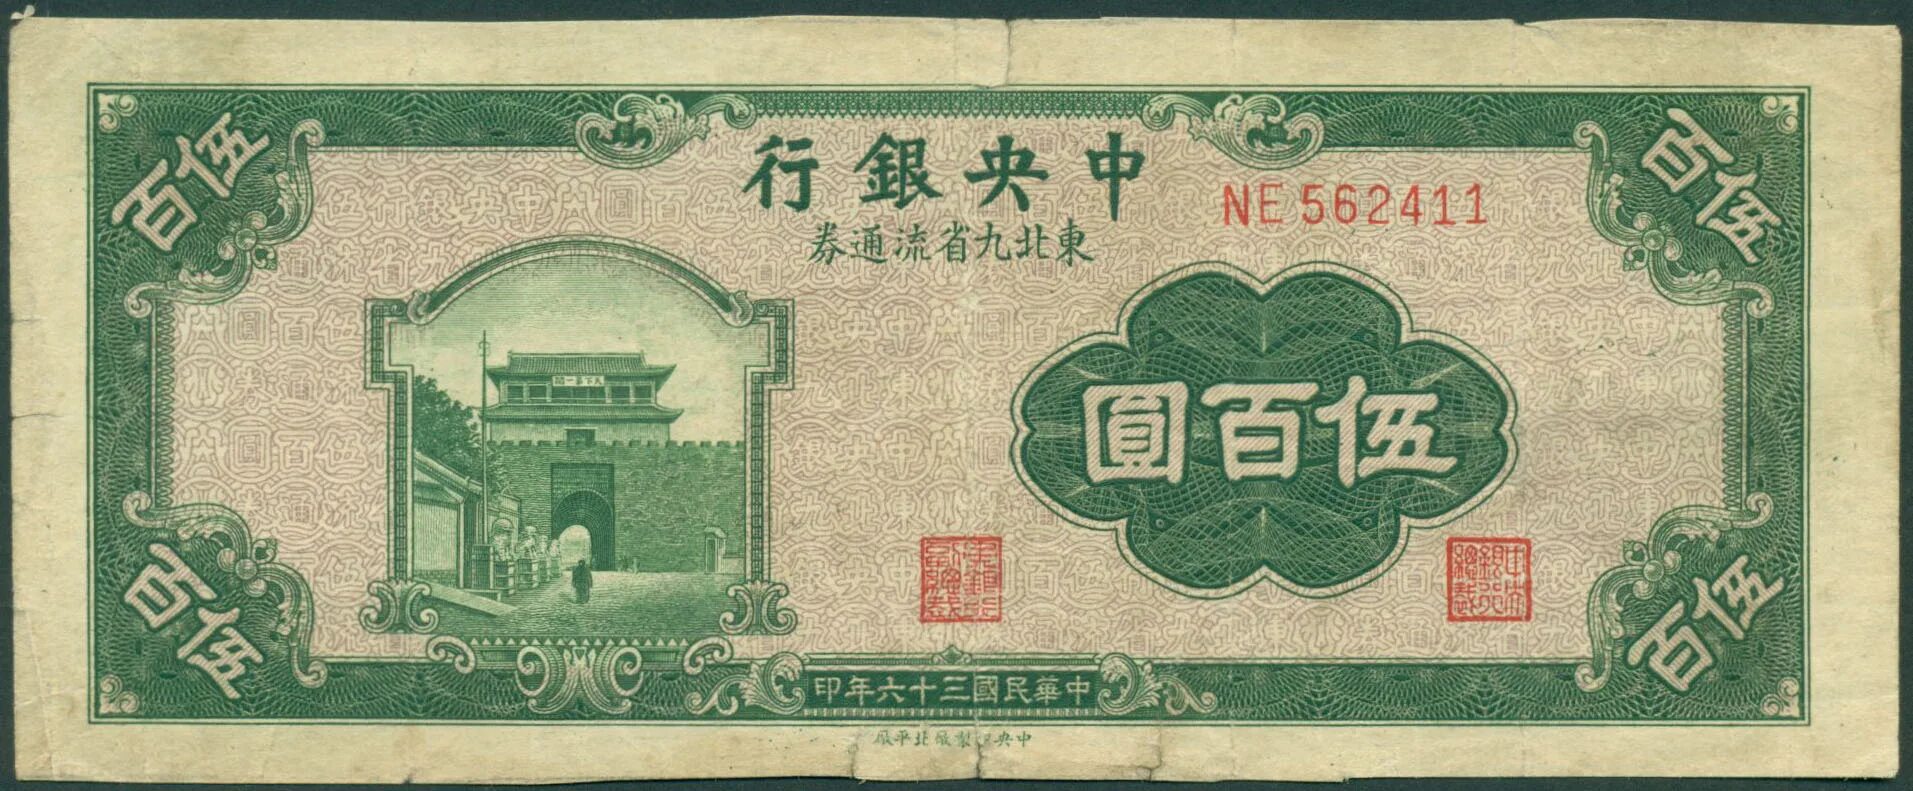 500 китайских. Юань 1946. 500 Юаней 1947. 500 Юаней банкнота. 500 Юаней Китай.